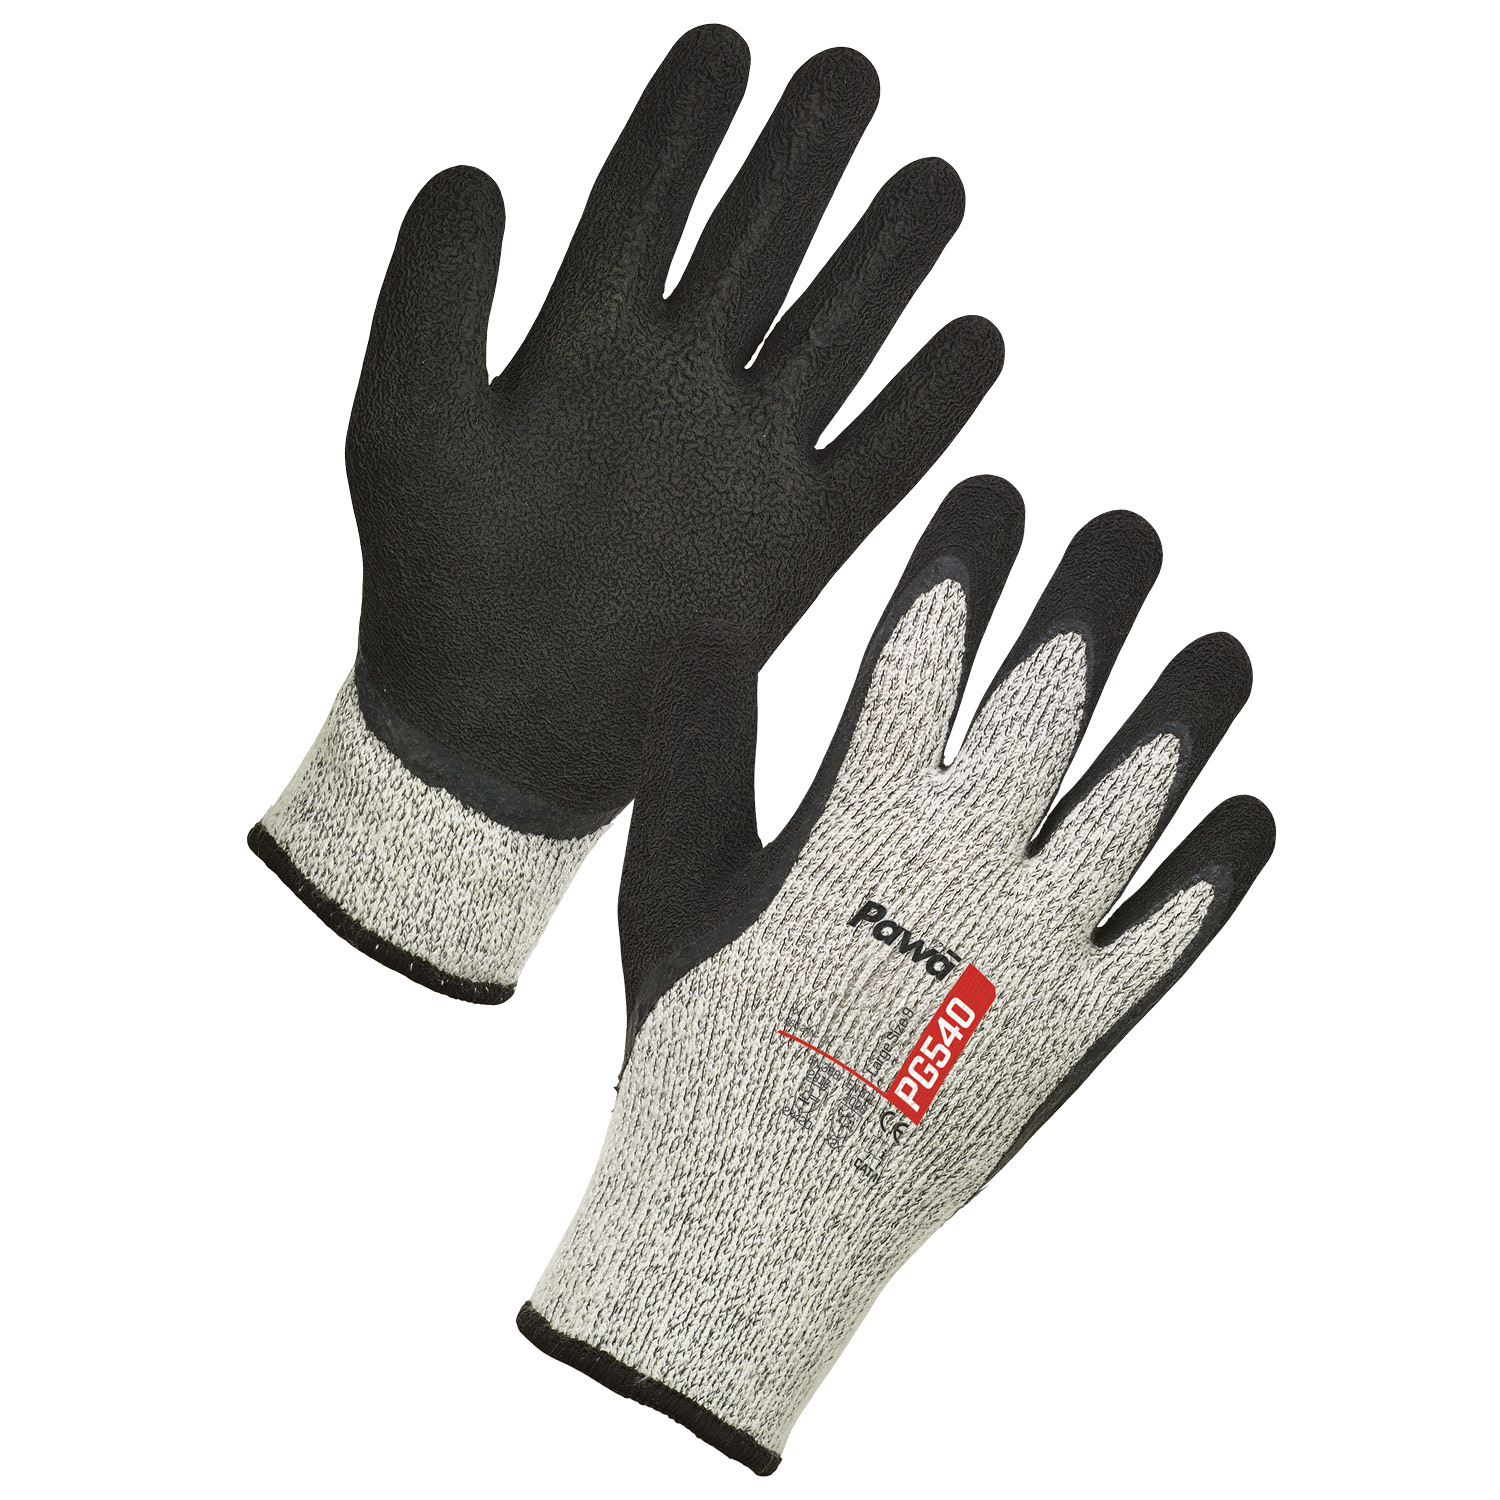 Pawa PG540 Cut-Resistant Thermal Gloves Medium